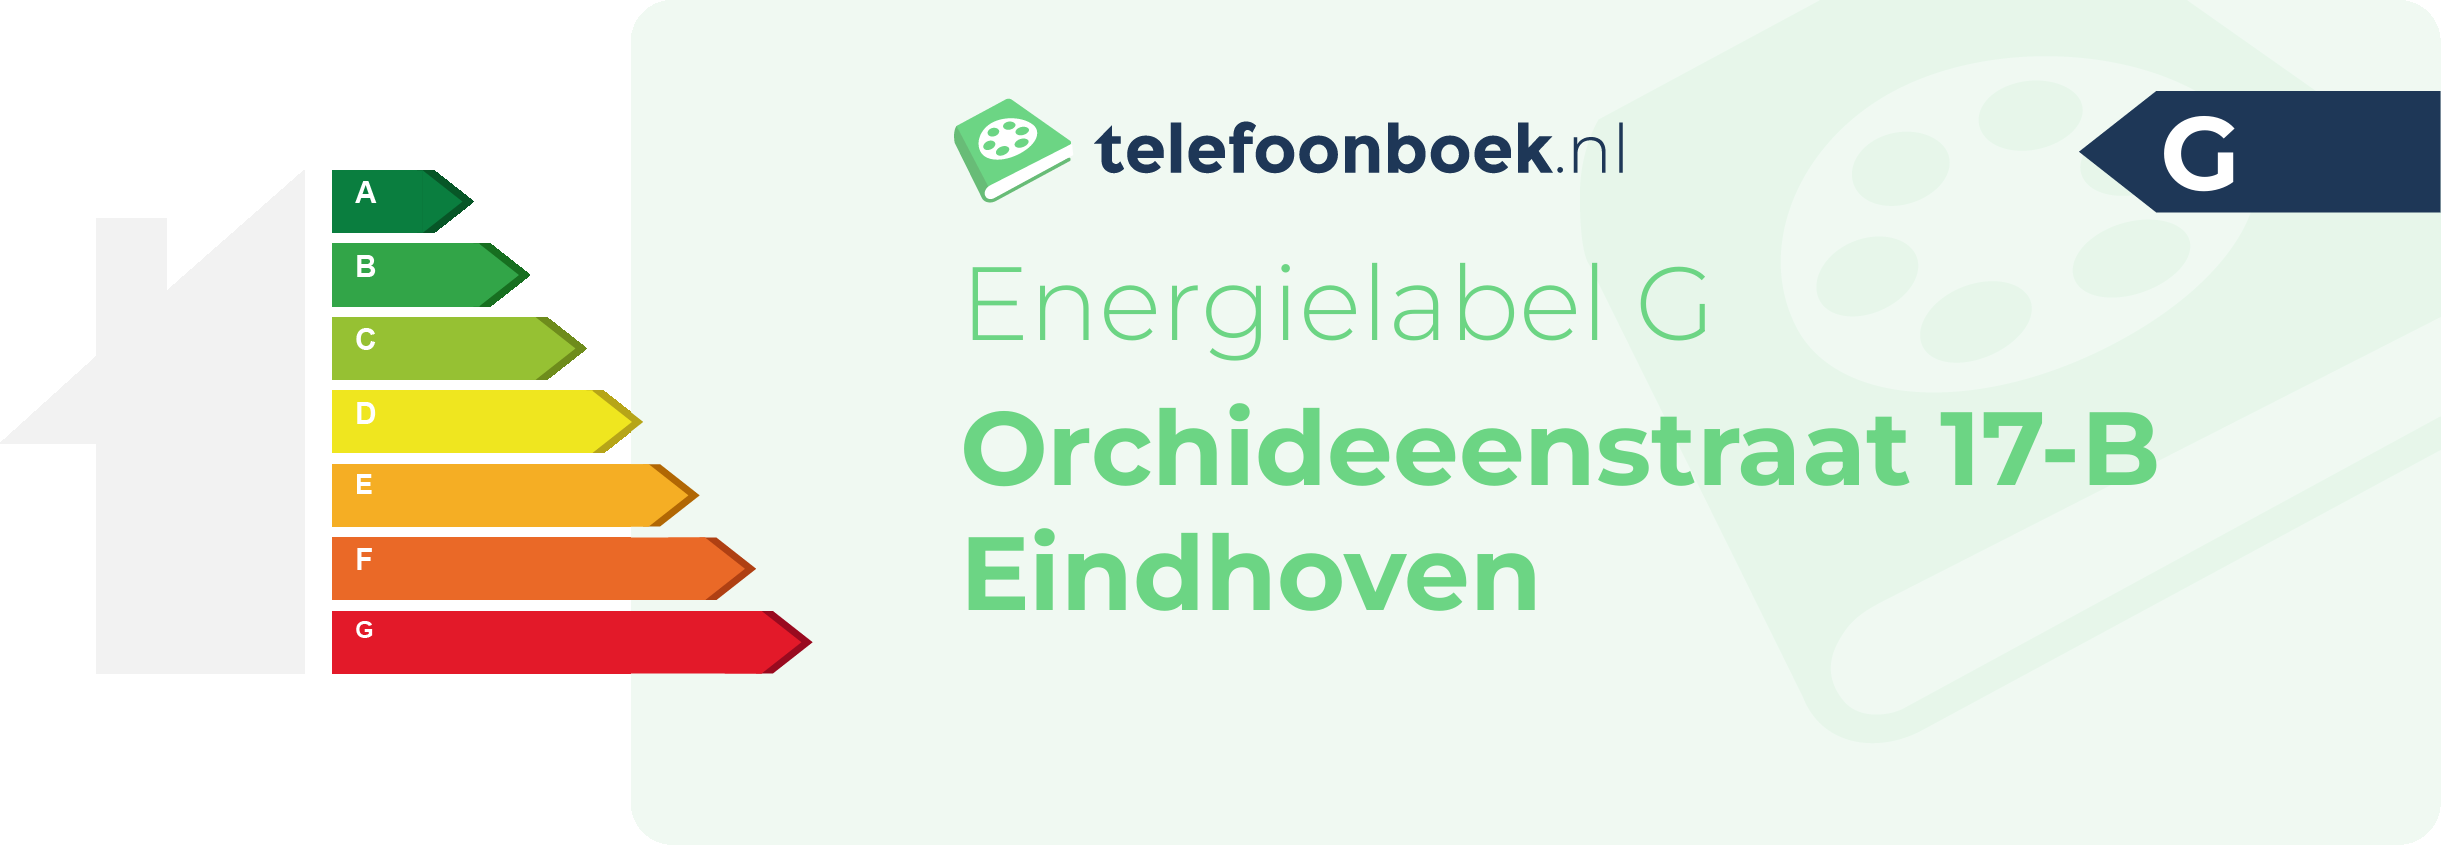 Energielabel Orchideeenstraat 17-B Eindhoven